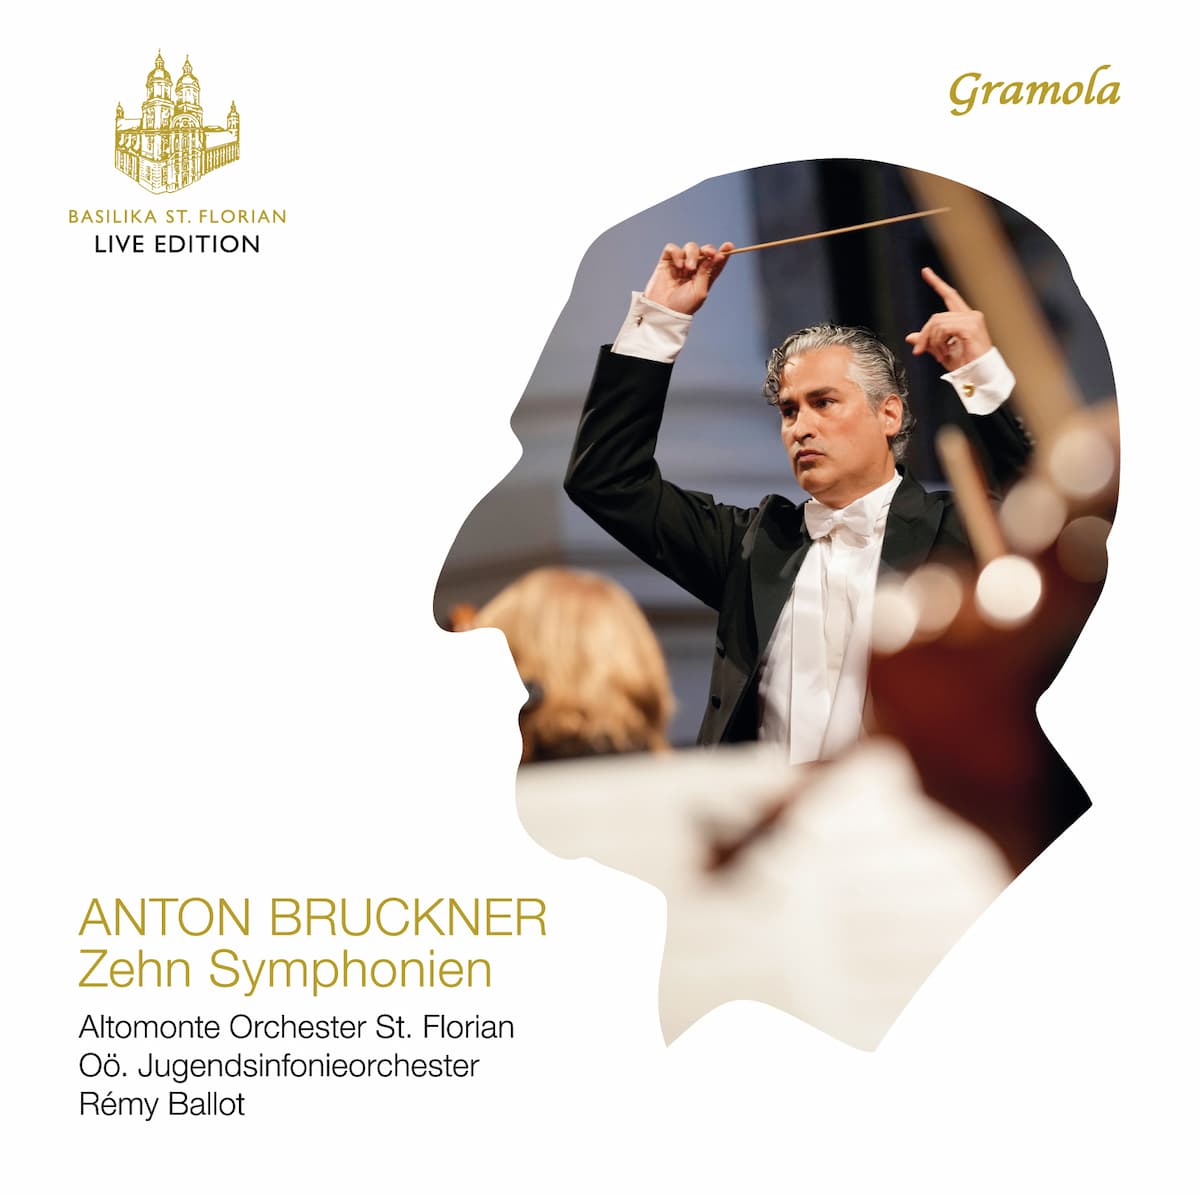 The Classical Bruckner: An Interview with Rémy Ballot